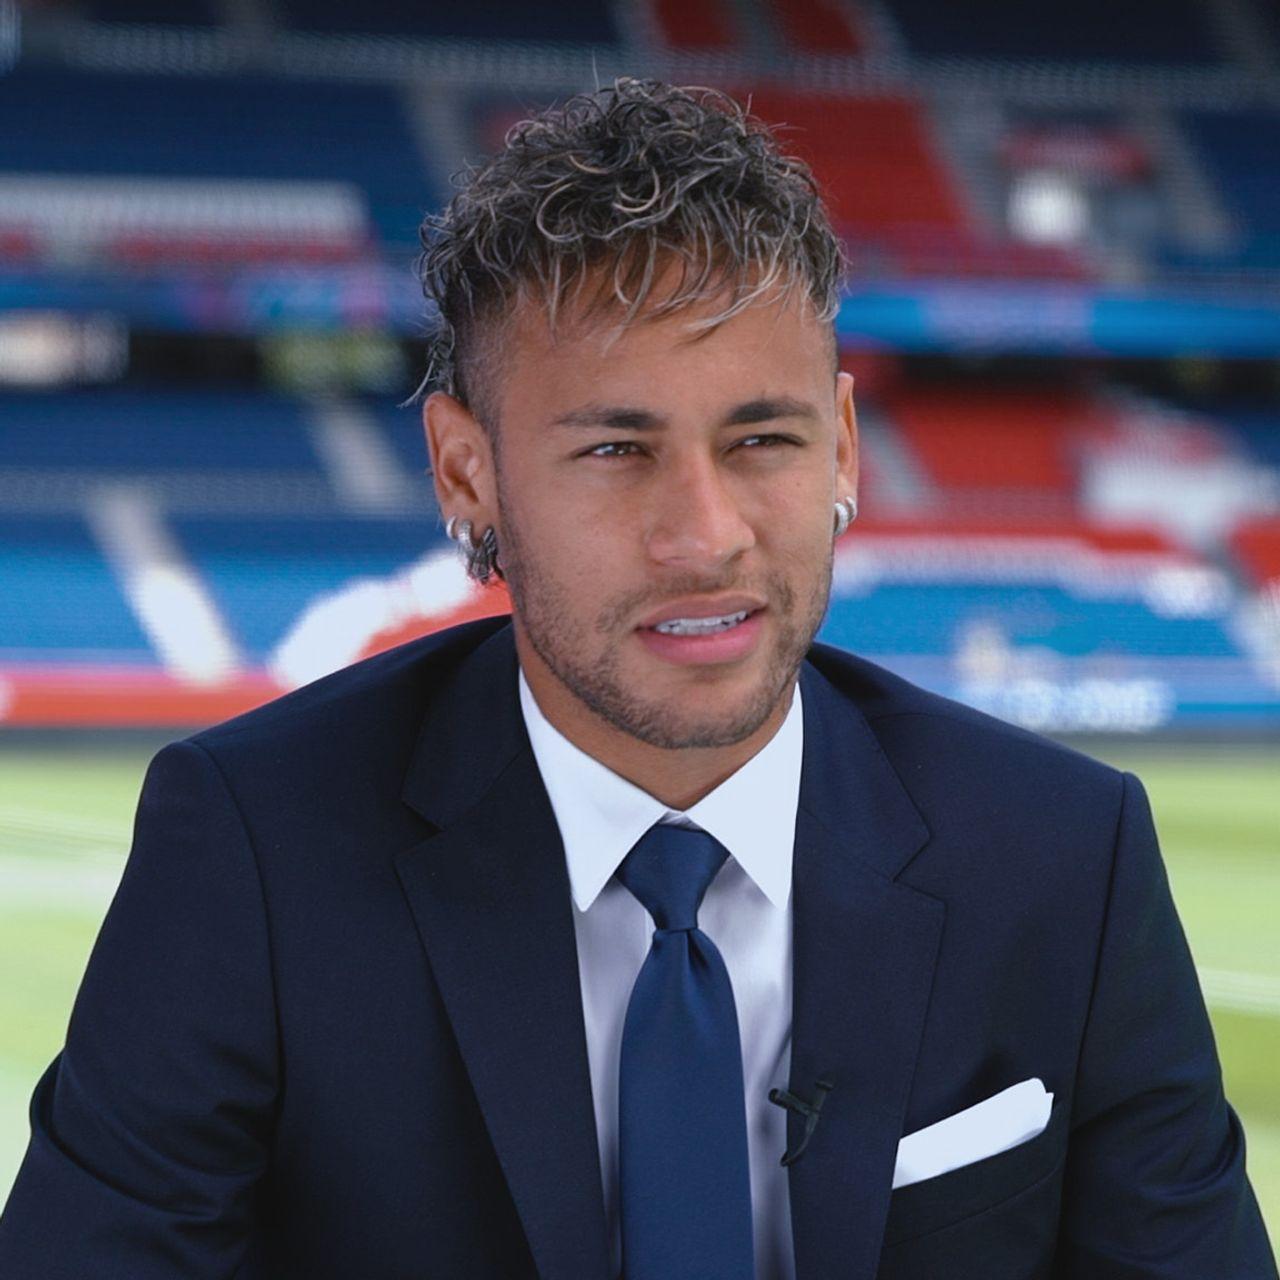 Neymar close to World Cup return, England and France set up last-eight showdown